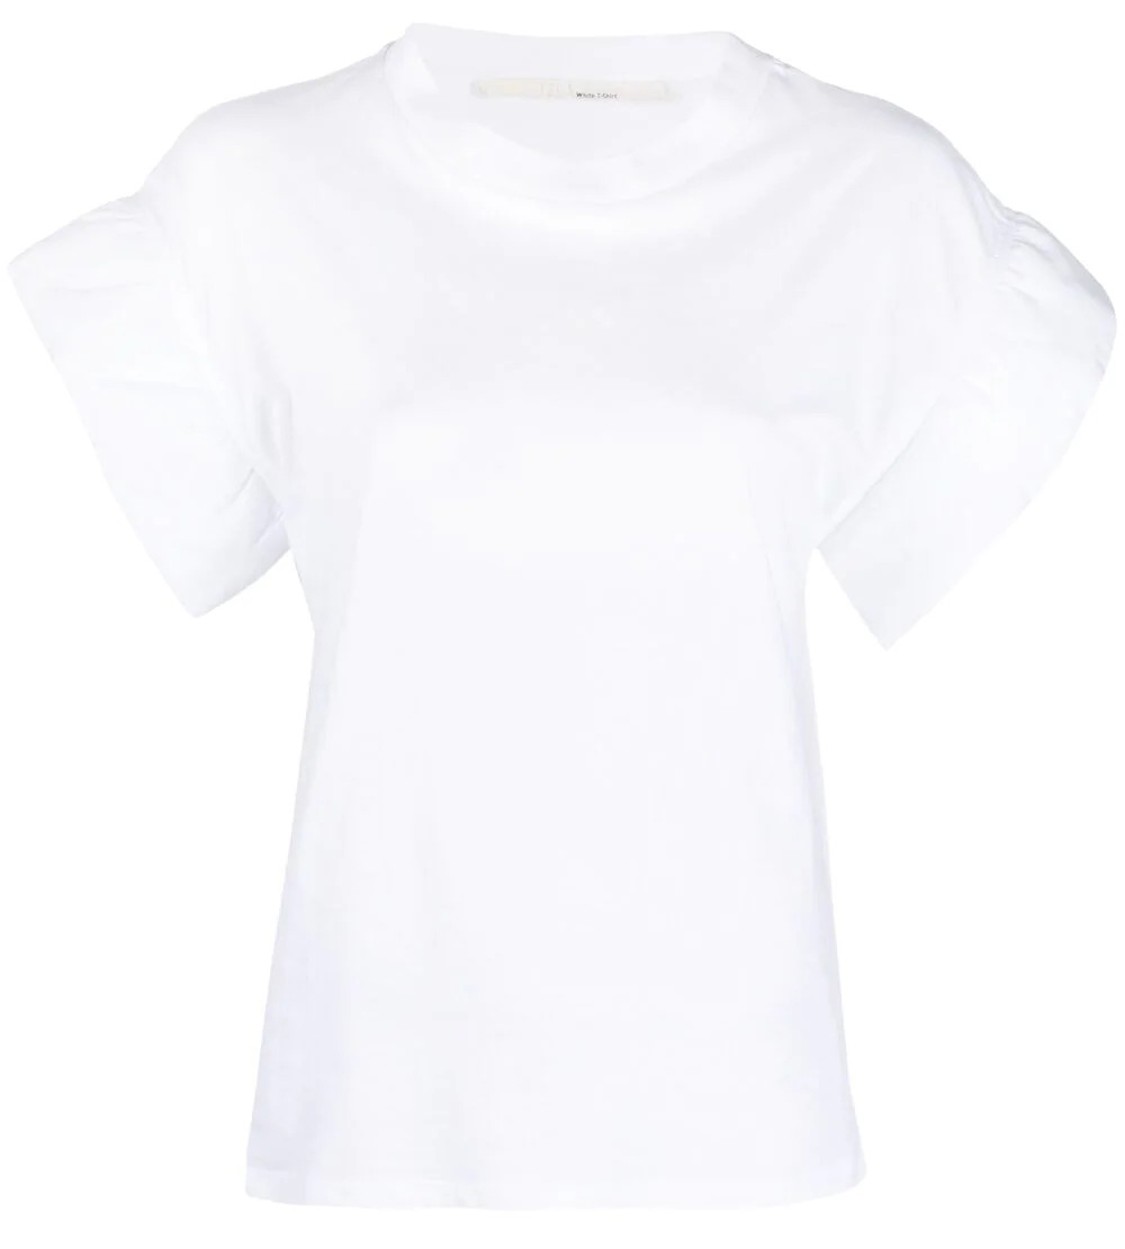 shop Tela Sales T-shirts: T-shirts Tela, manica corta, girocollo, fit regolare, manica bold.

Composizione: 100% cotone. number 2147